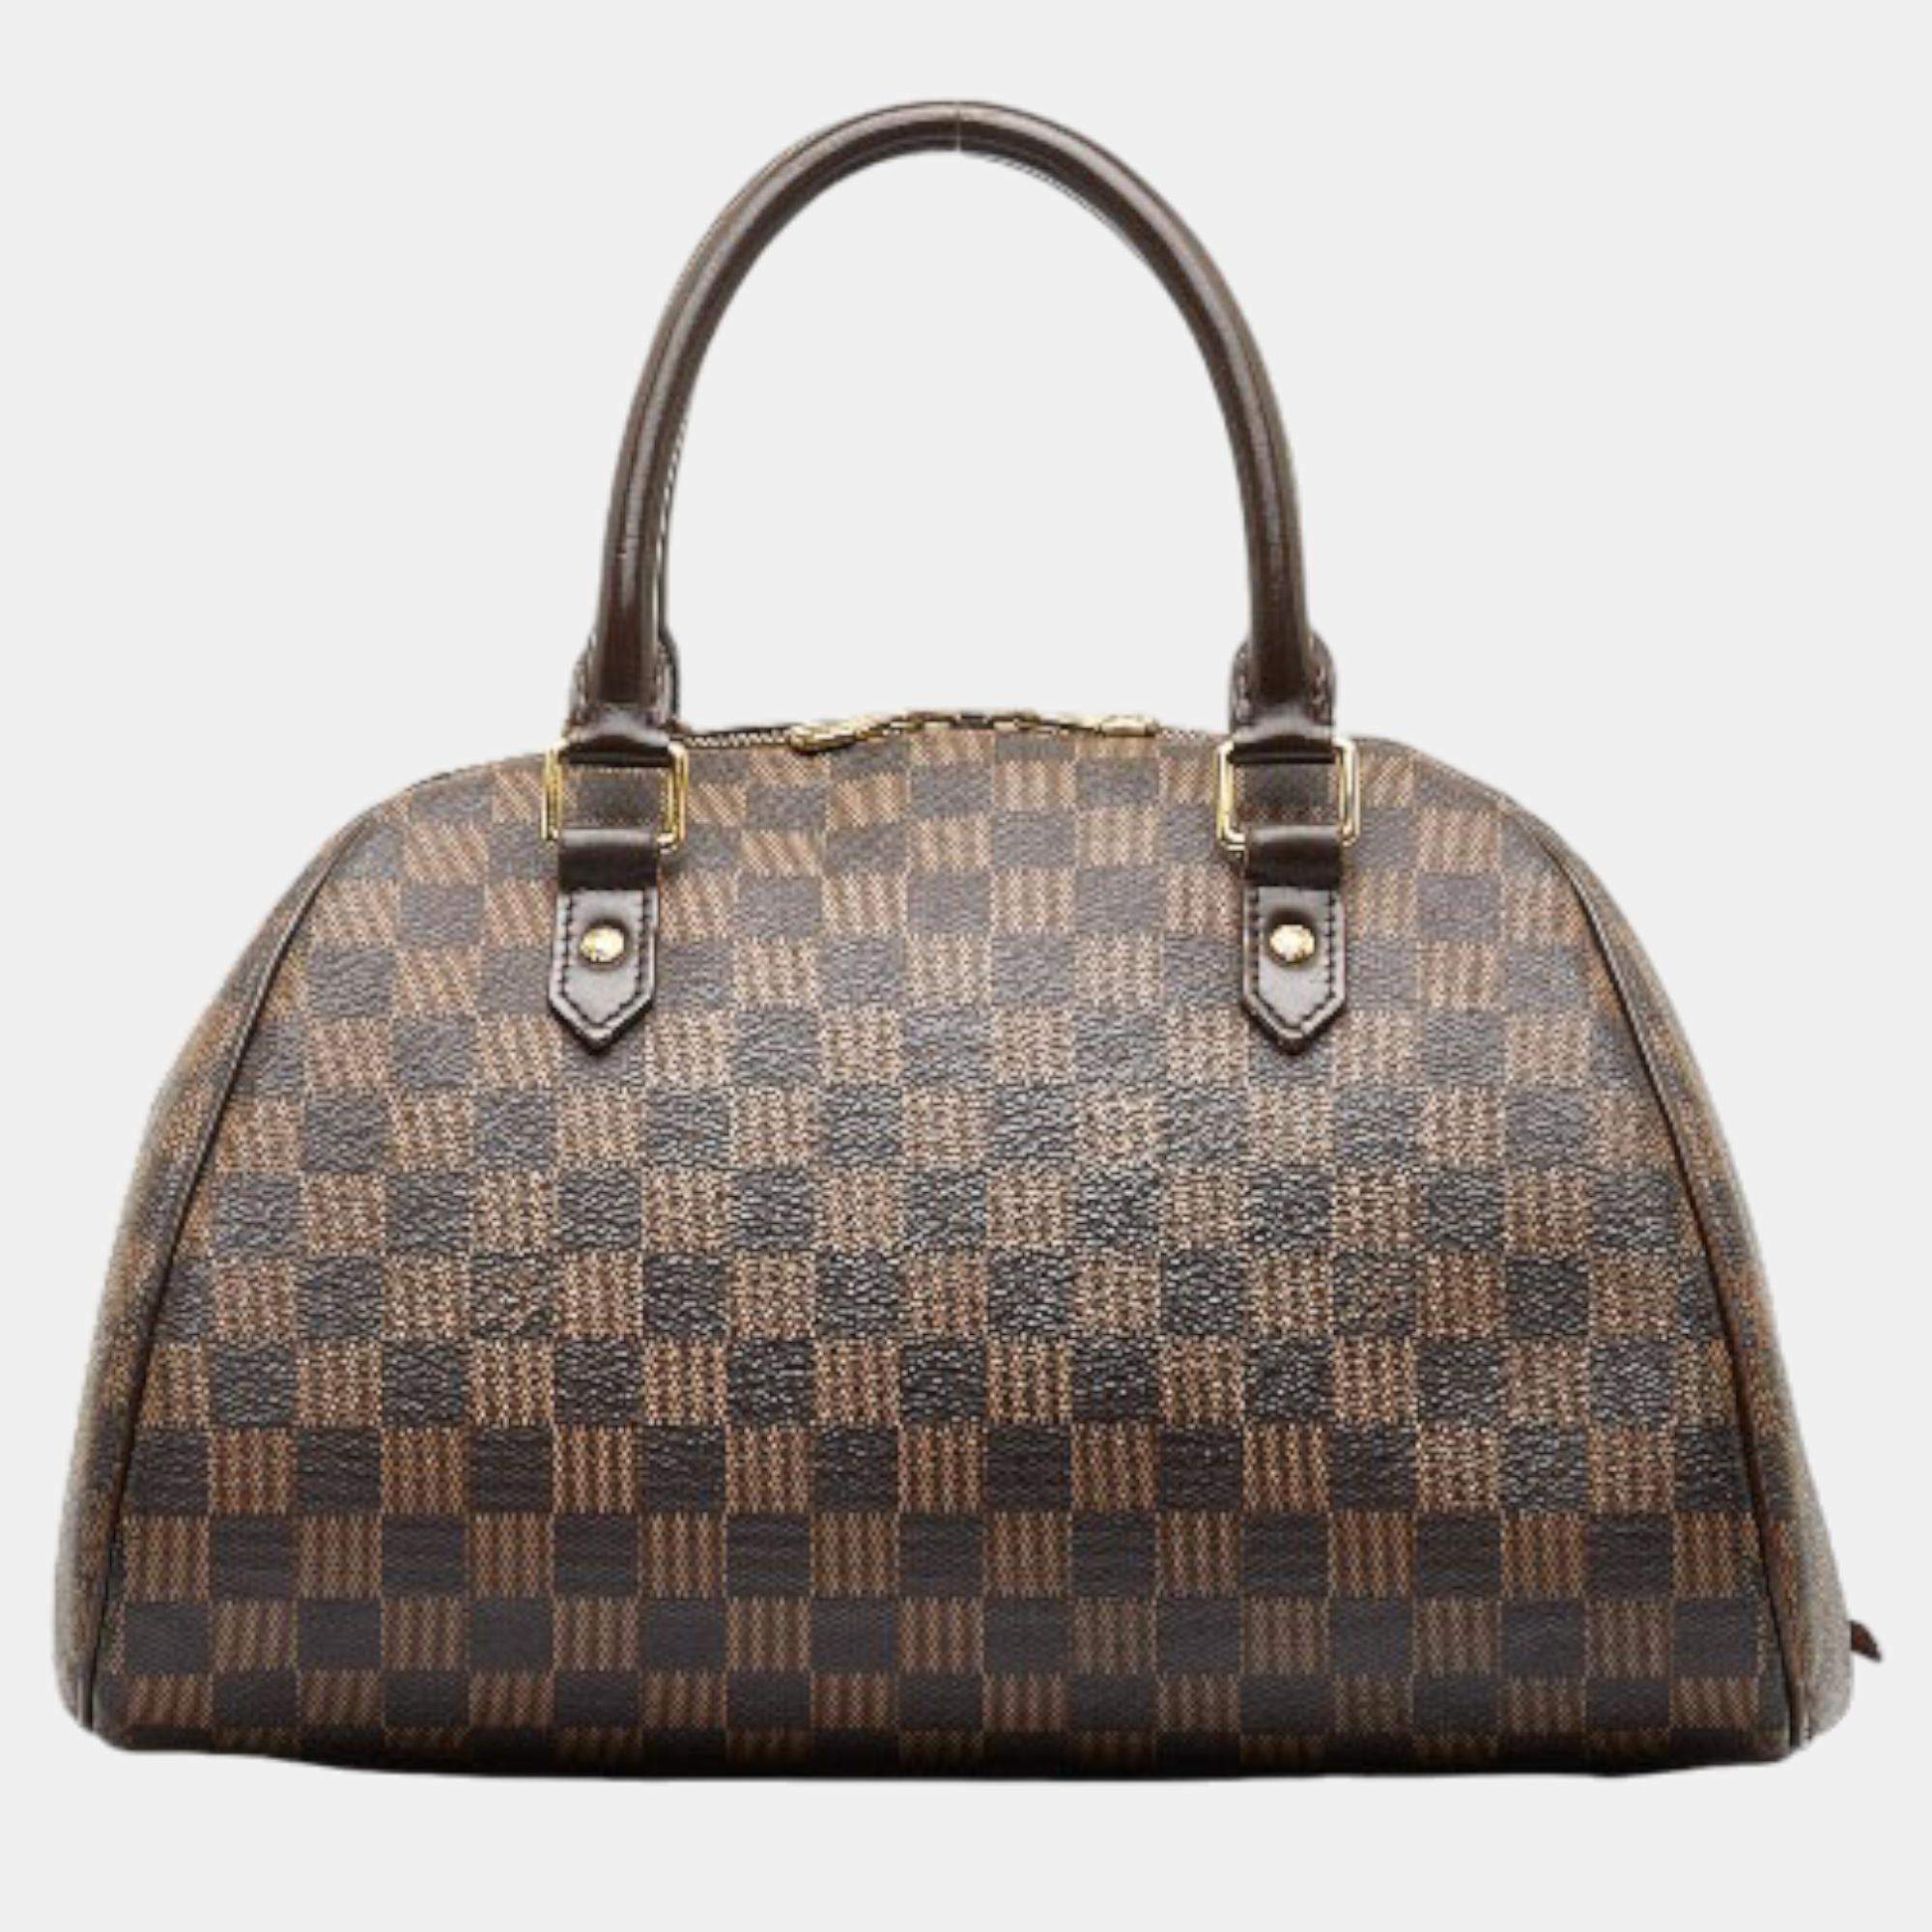 Louis Vuitton Louis Vuitton Cup Large Bags & Handbags for Women, Authenticity Guaranteed